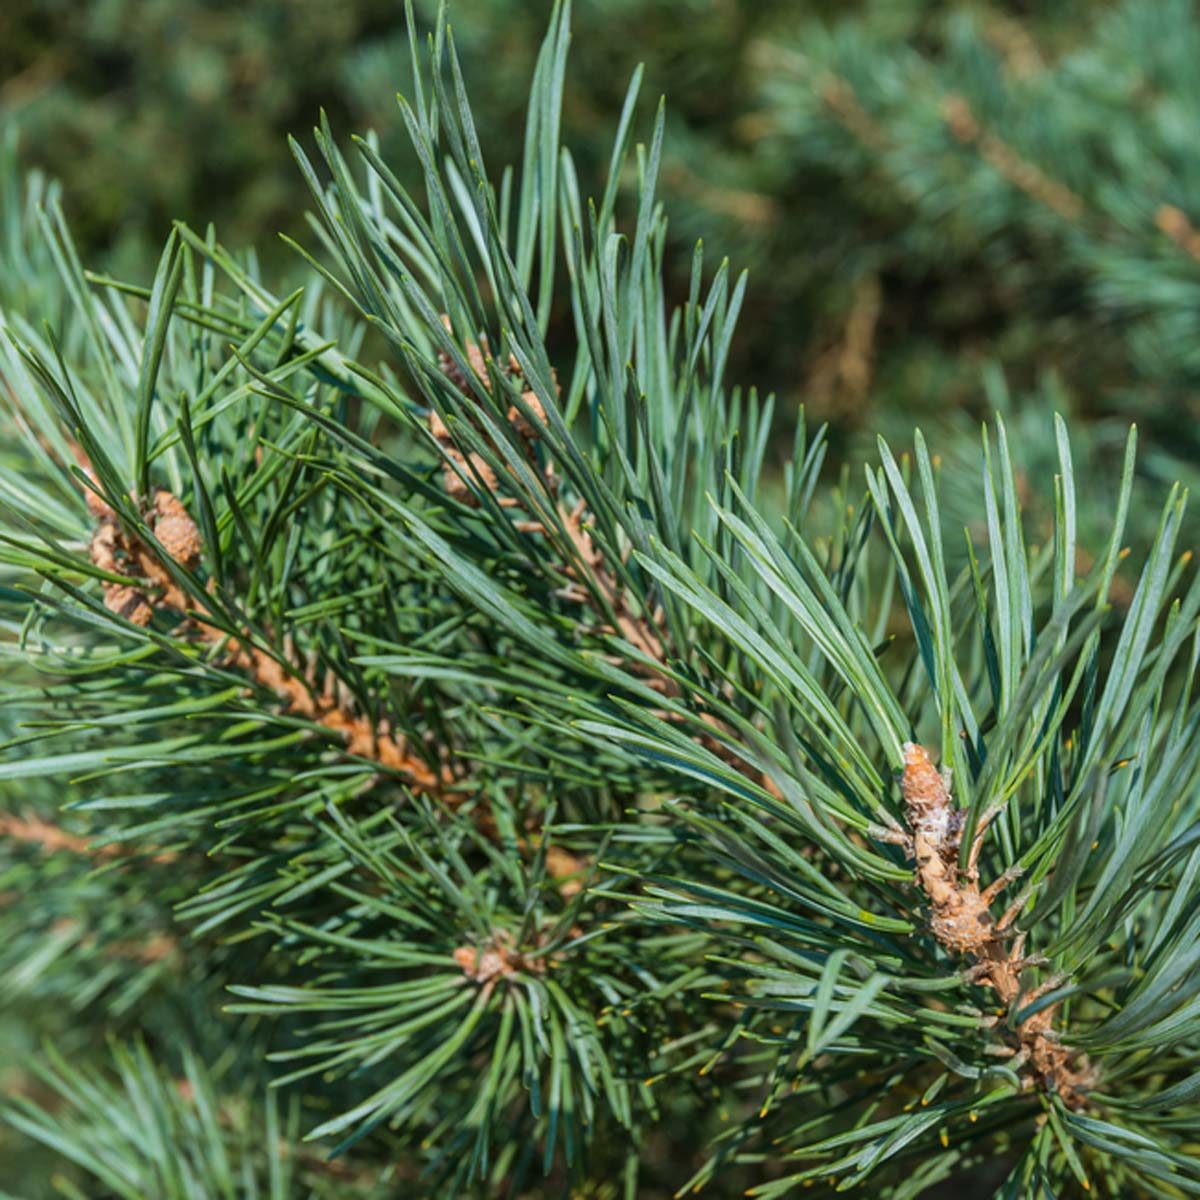 Scots or Scotch pine (Pinus sylvestris)